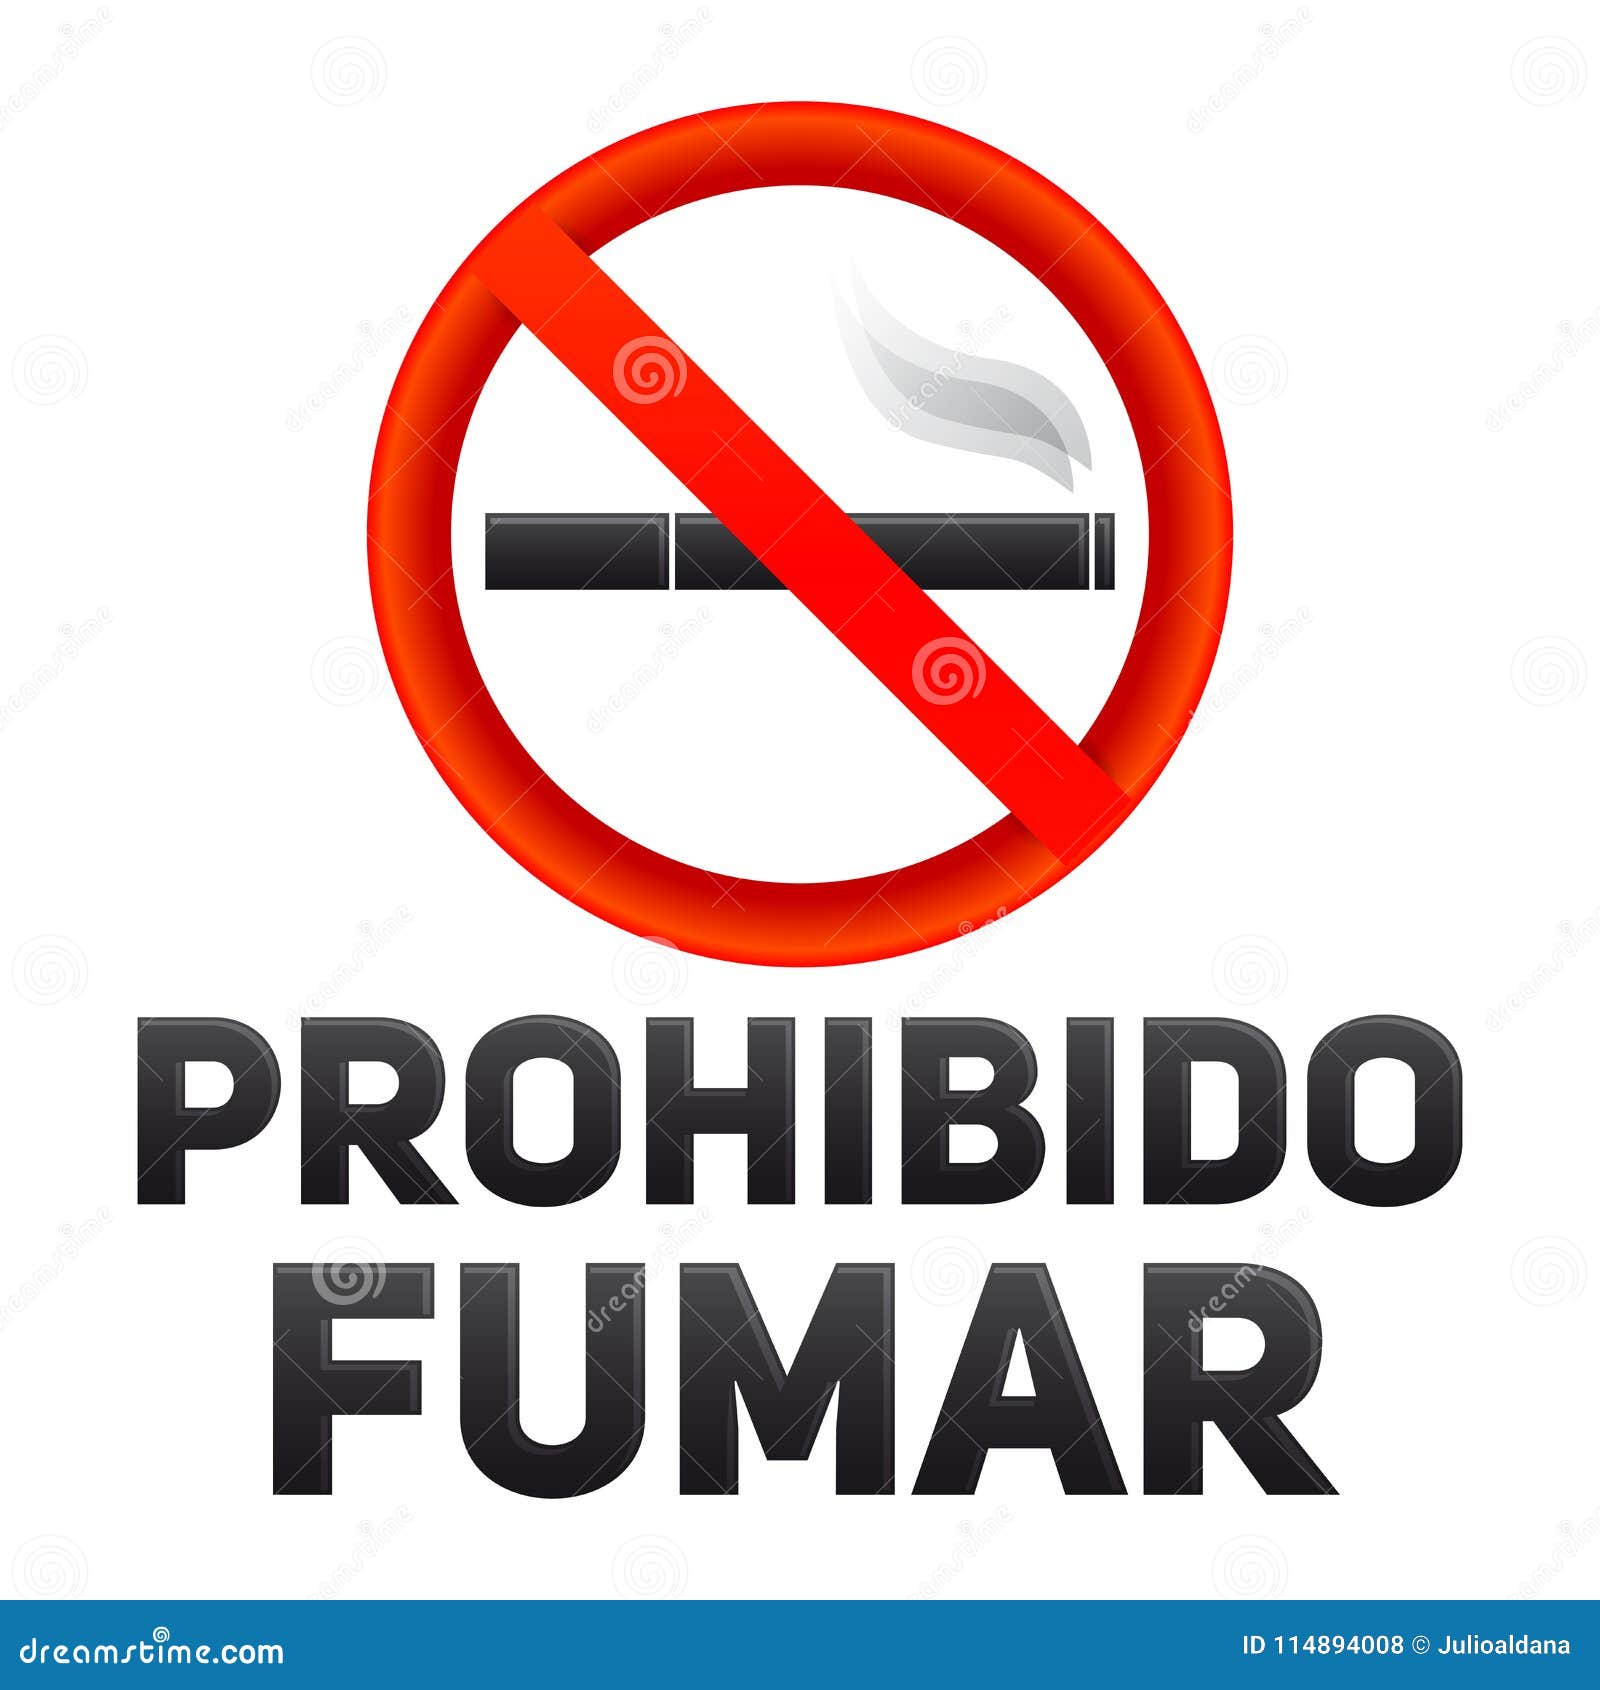 prohibido fumar, no smoking spanish text sign